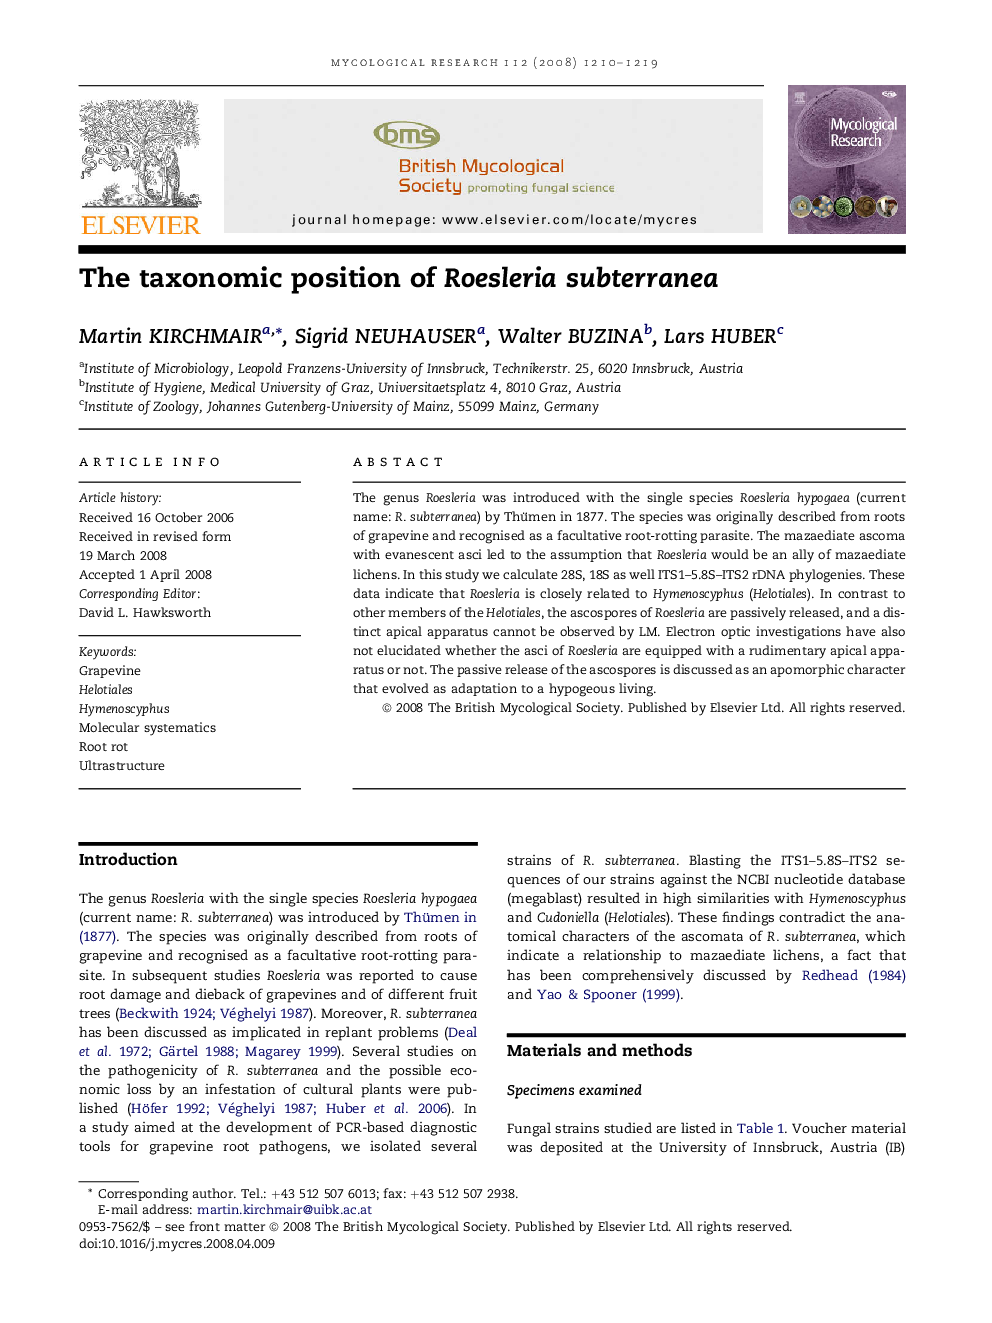 The taxonomic position of Roesleria subterranea